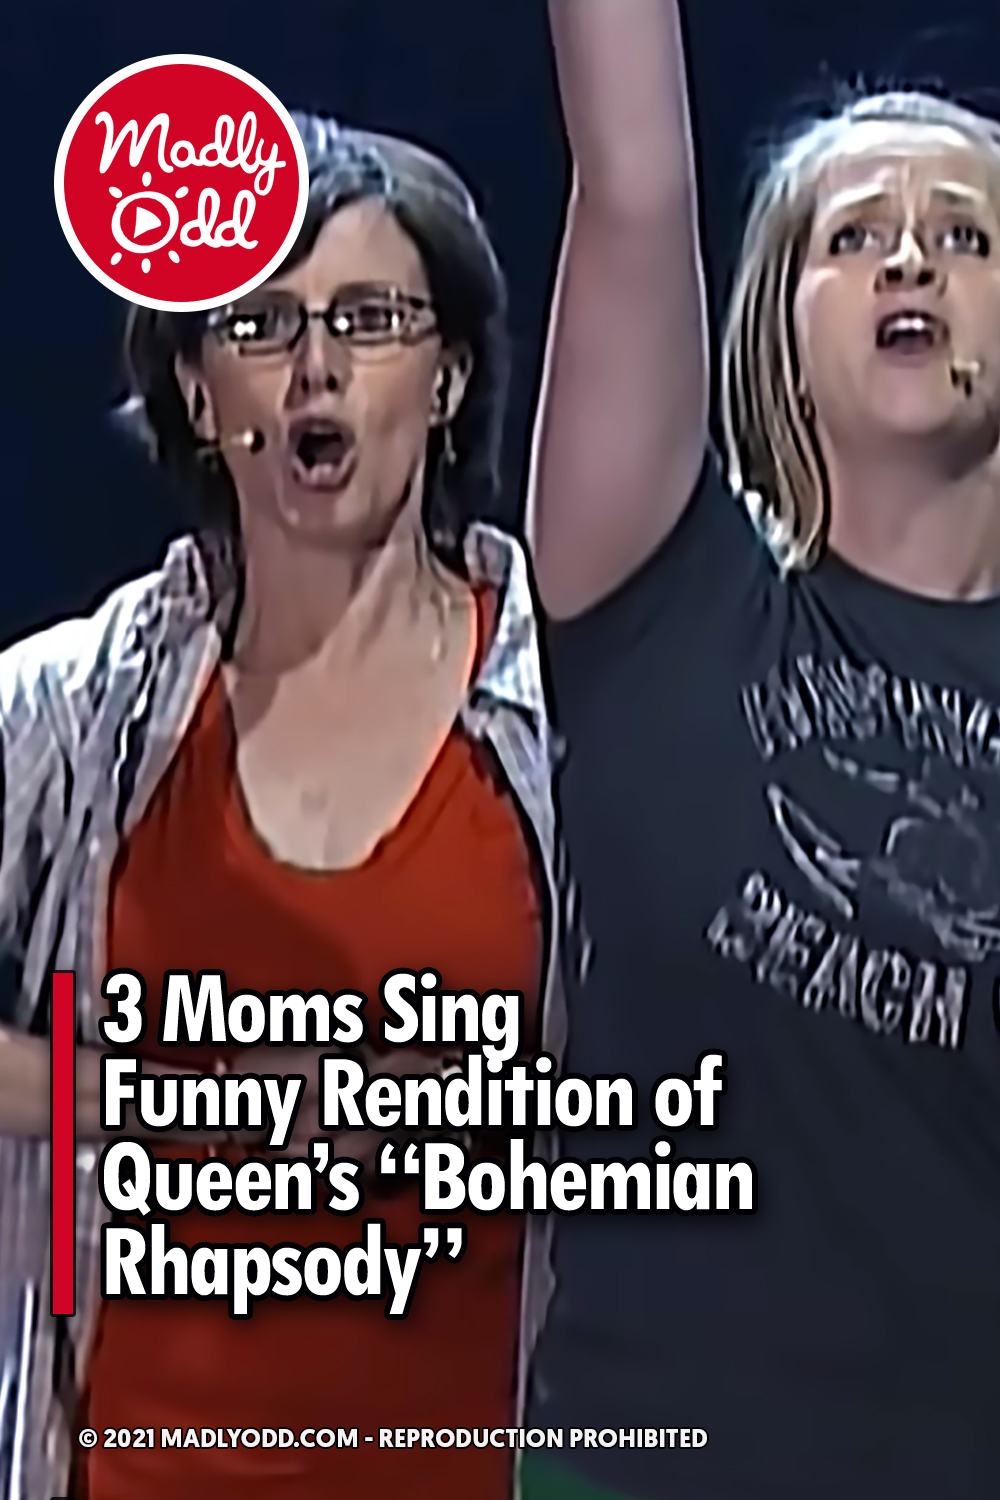 3 Moms Sing Funny Rendition of Queen’s “Bohemian Rhapsody”